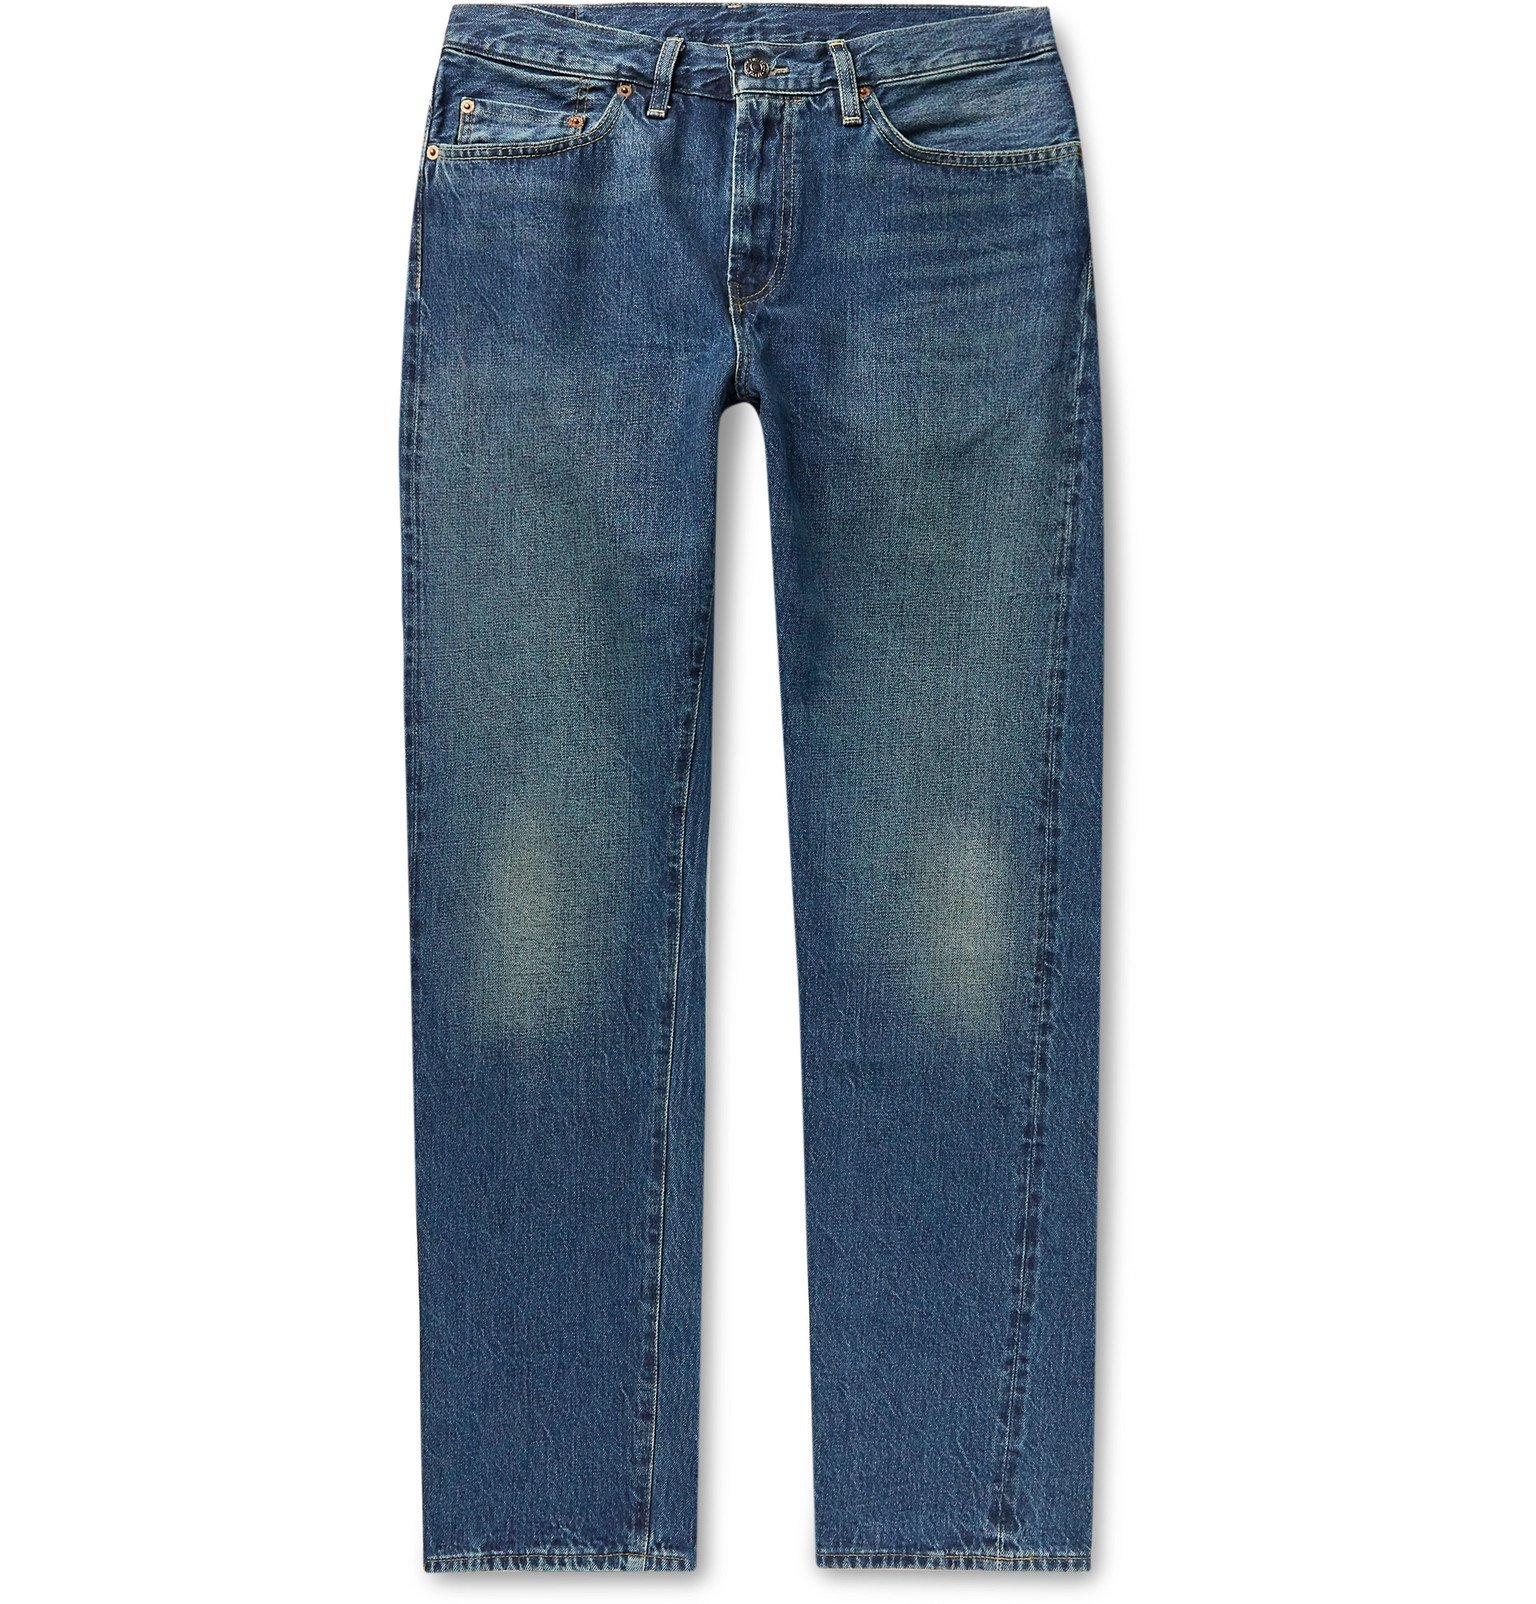 levi's 501 original japanese denim jeans